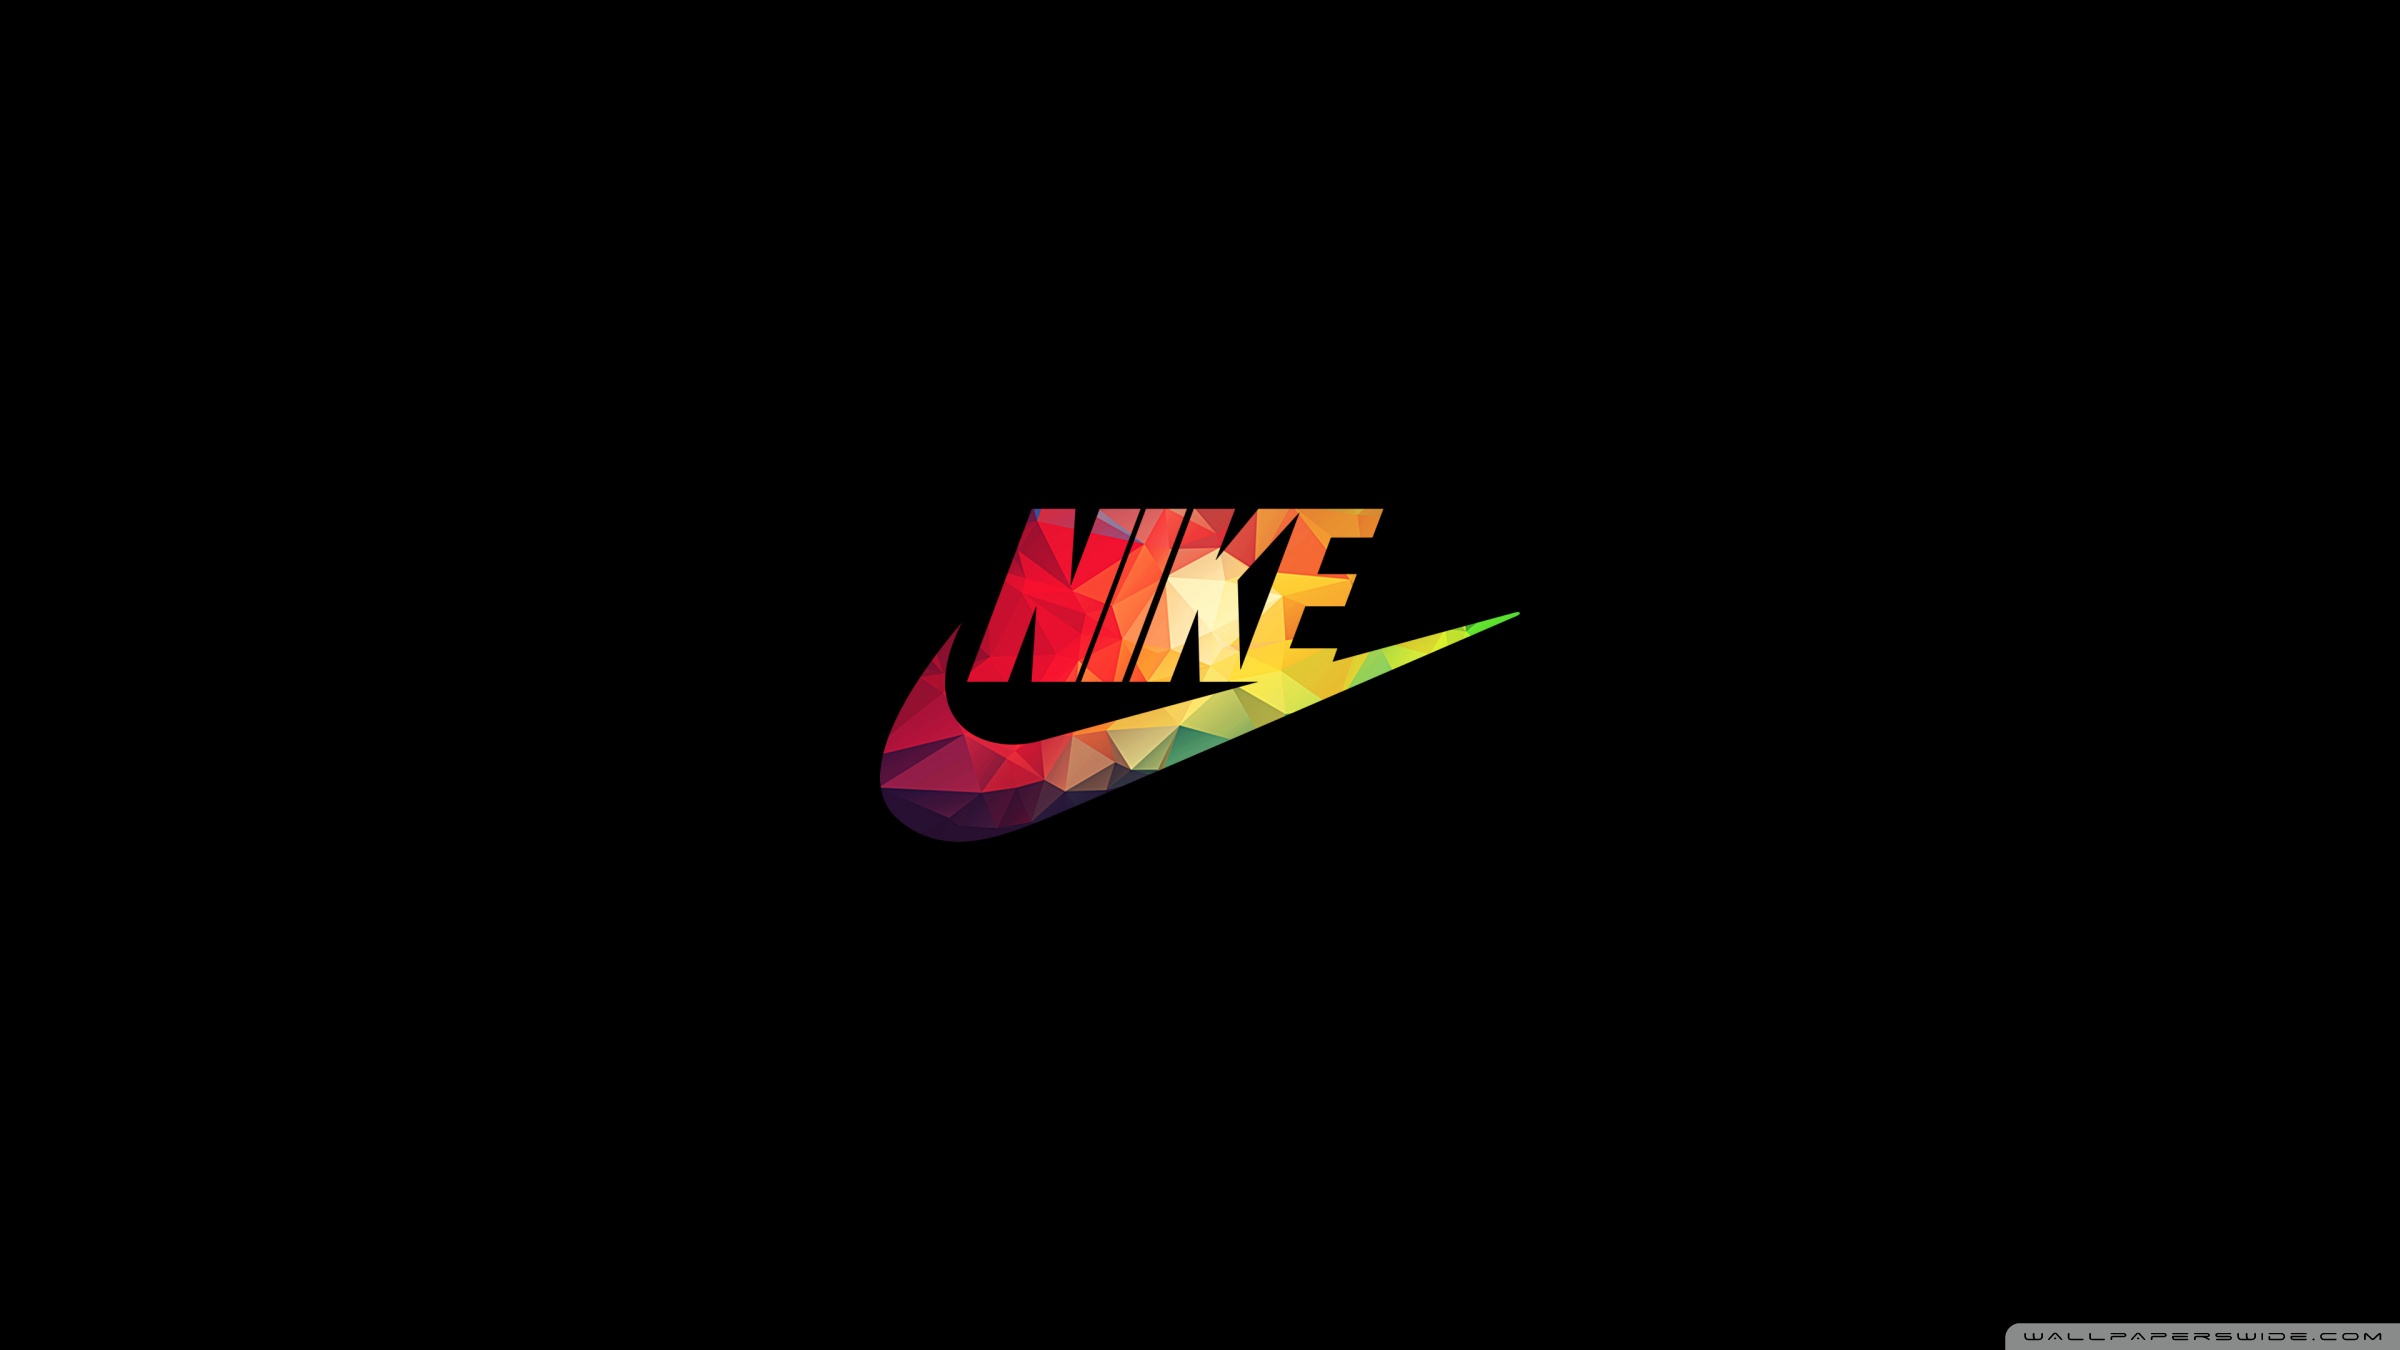 Galaxy Nike Symbol Wallpaper